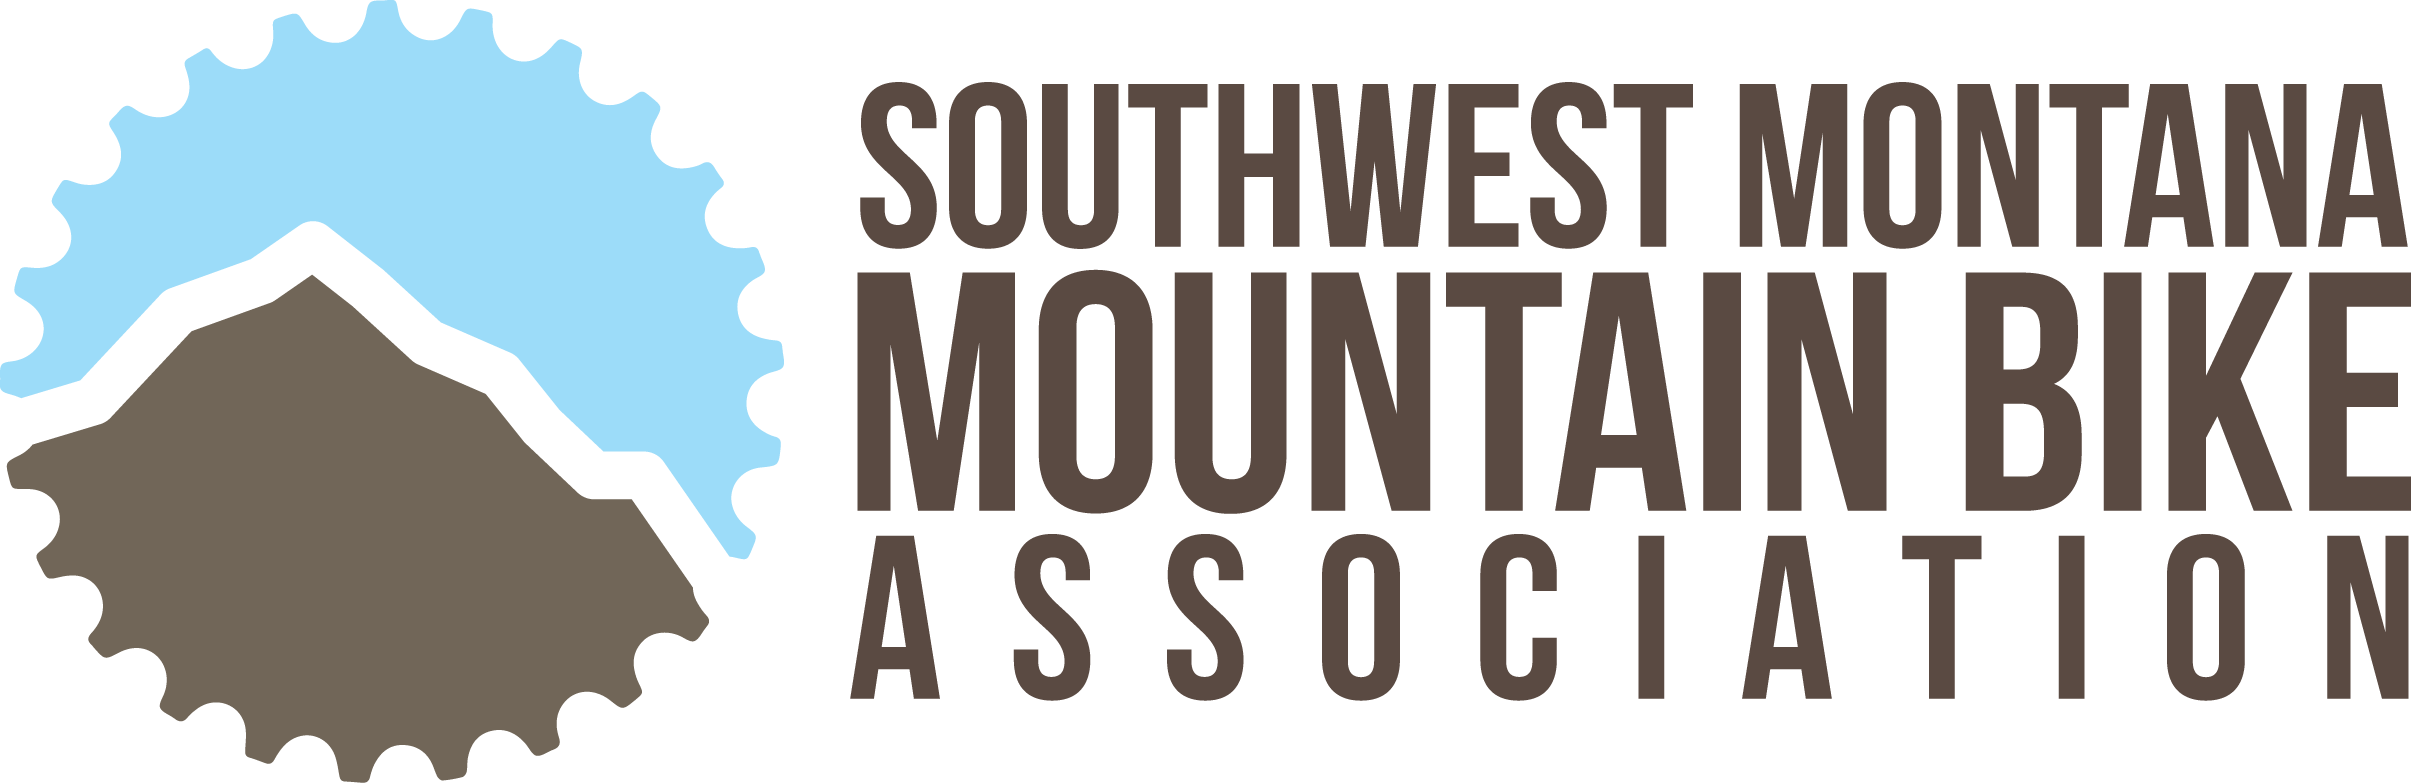 Southwest Montana Mountain Bike Association logo